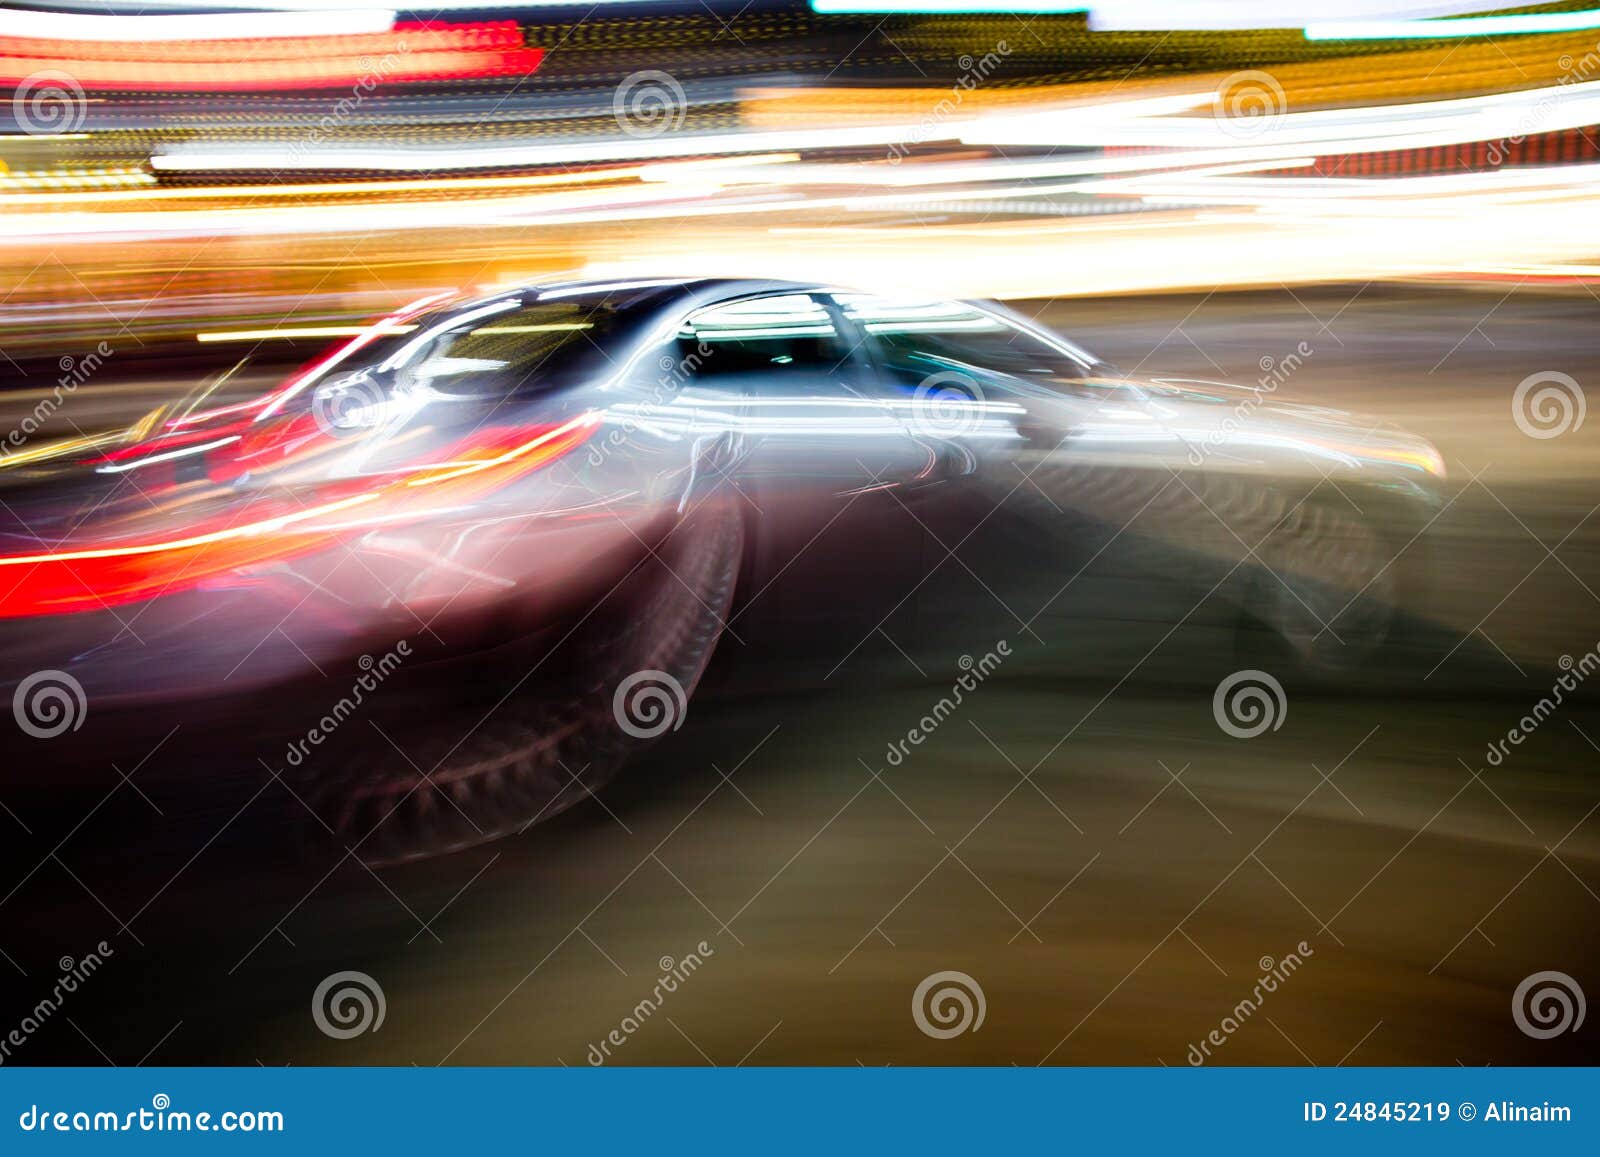 Snel bewegende auto stock Image - 24845219